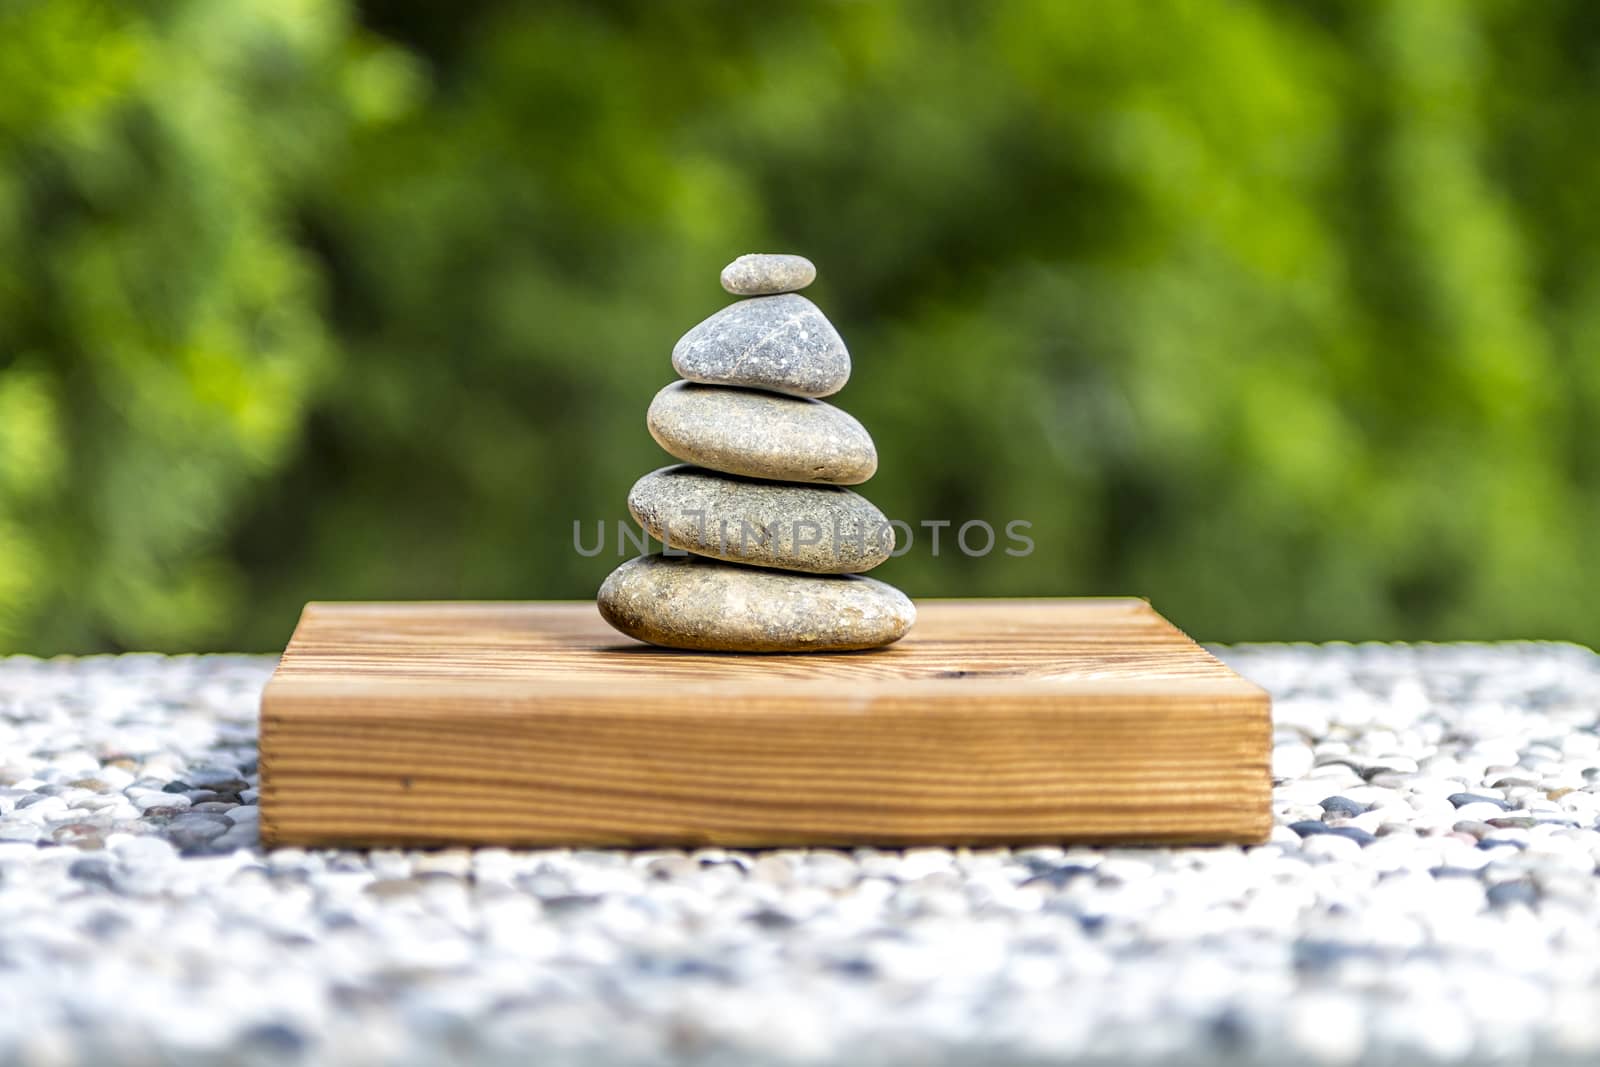 Zen stones on wood by asafaric